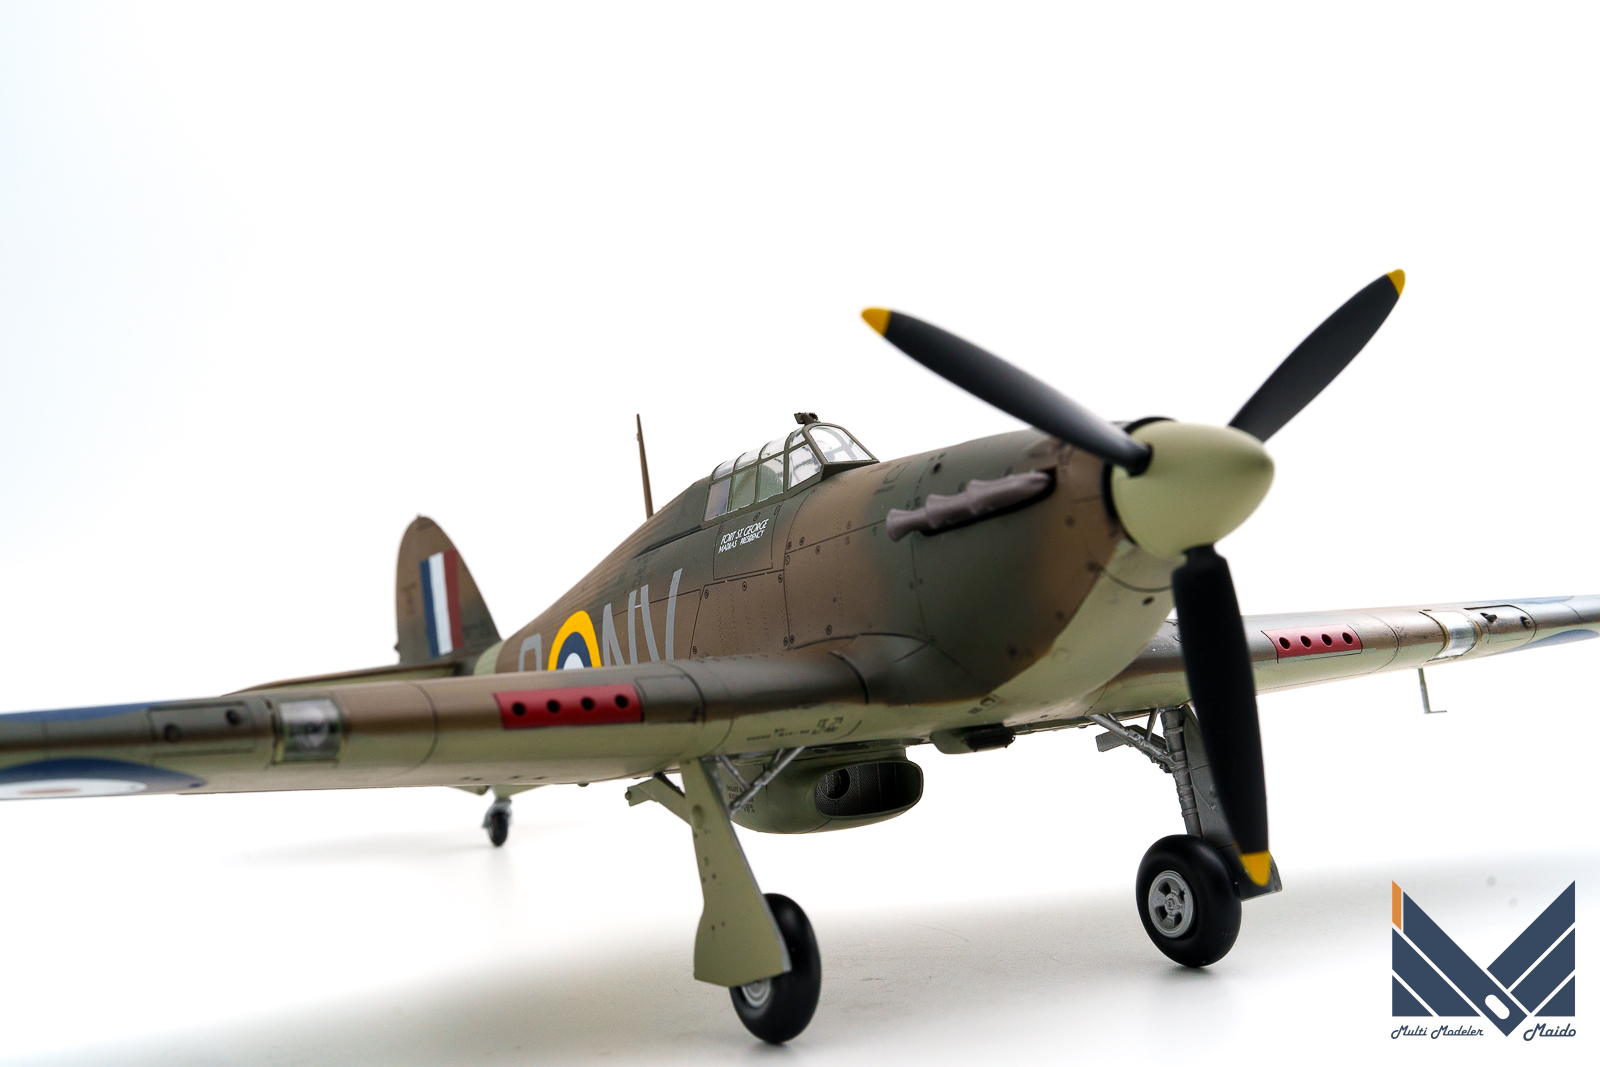 atsudra工房完成品】1/32 Hawker Hurricane Mk IIb - プラモデル